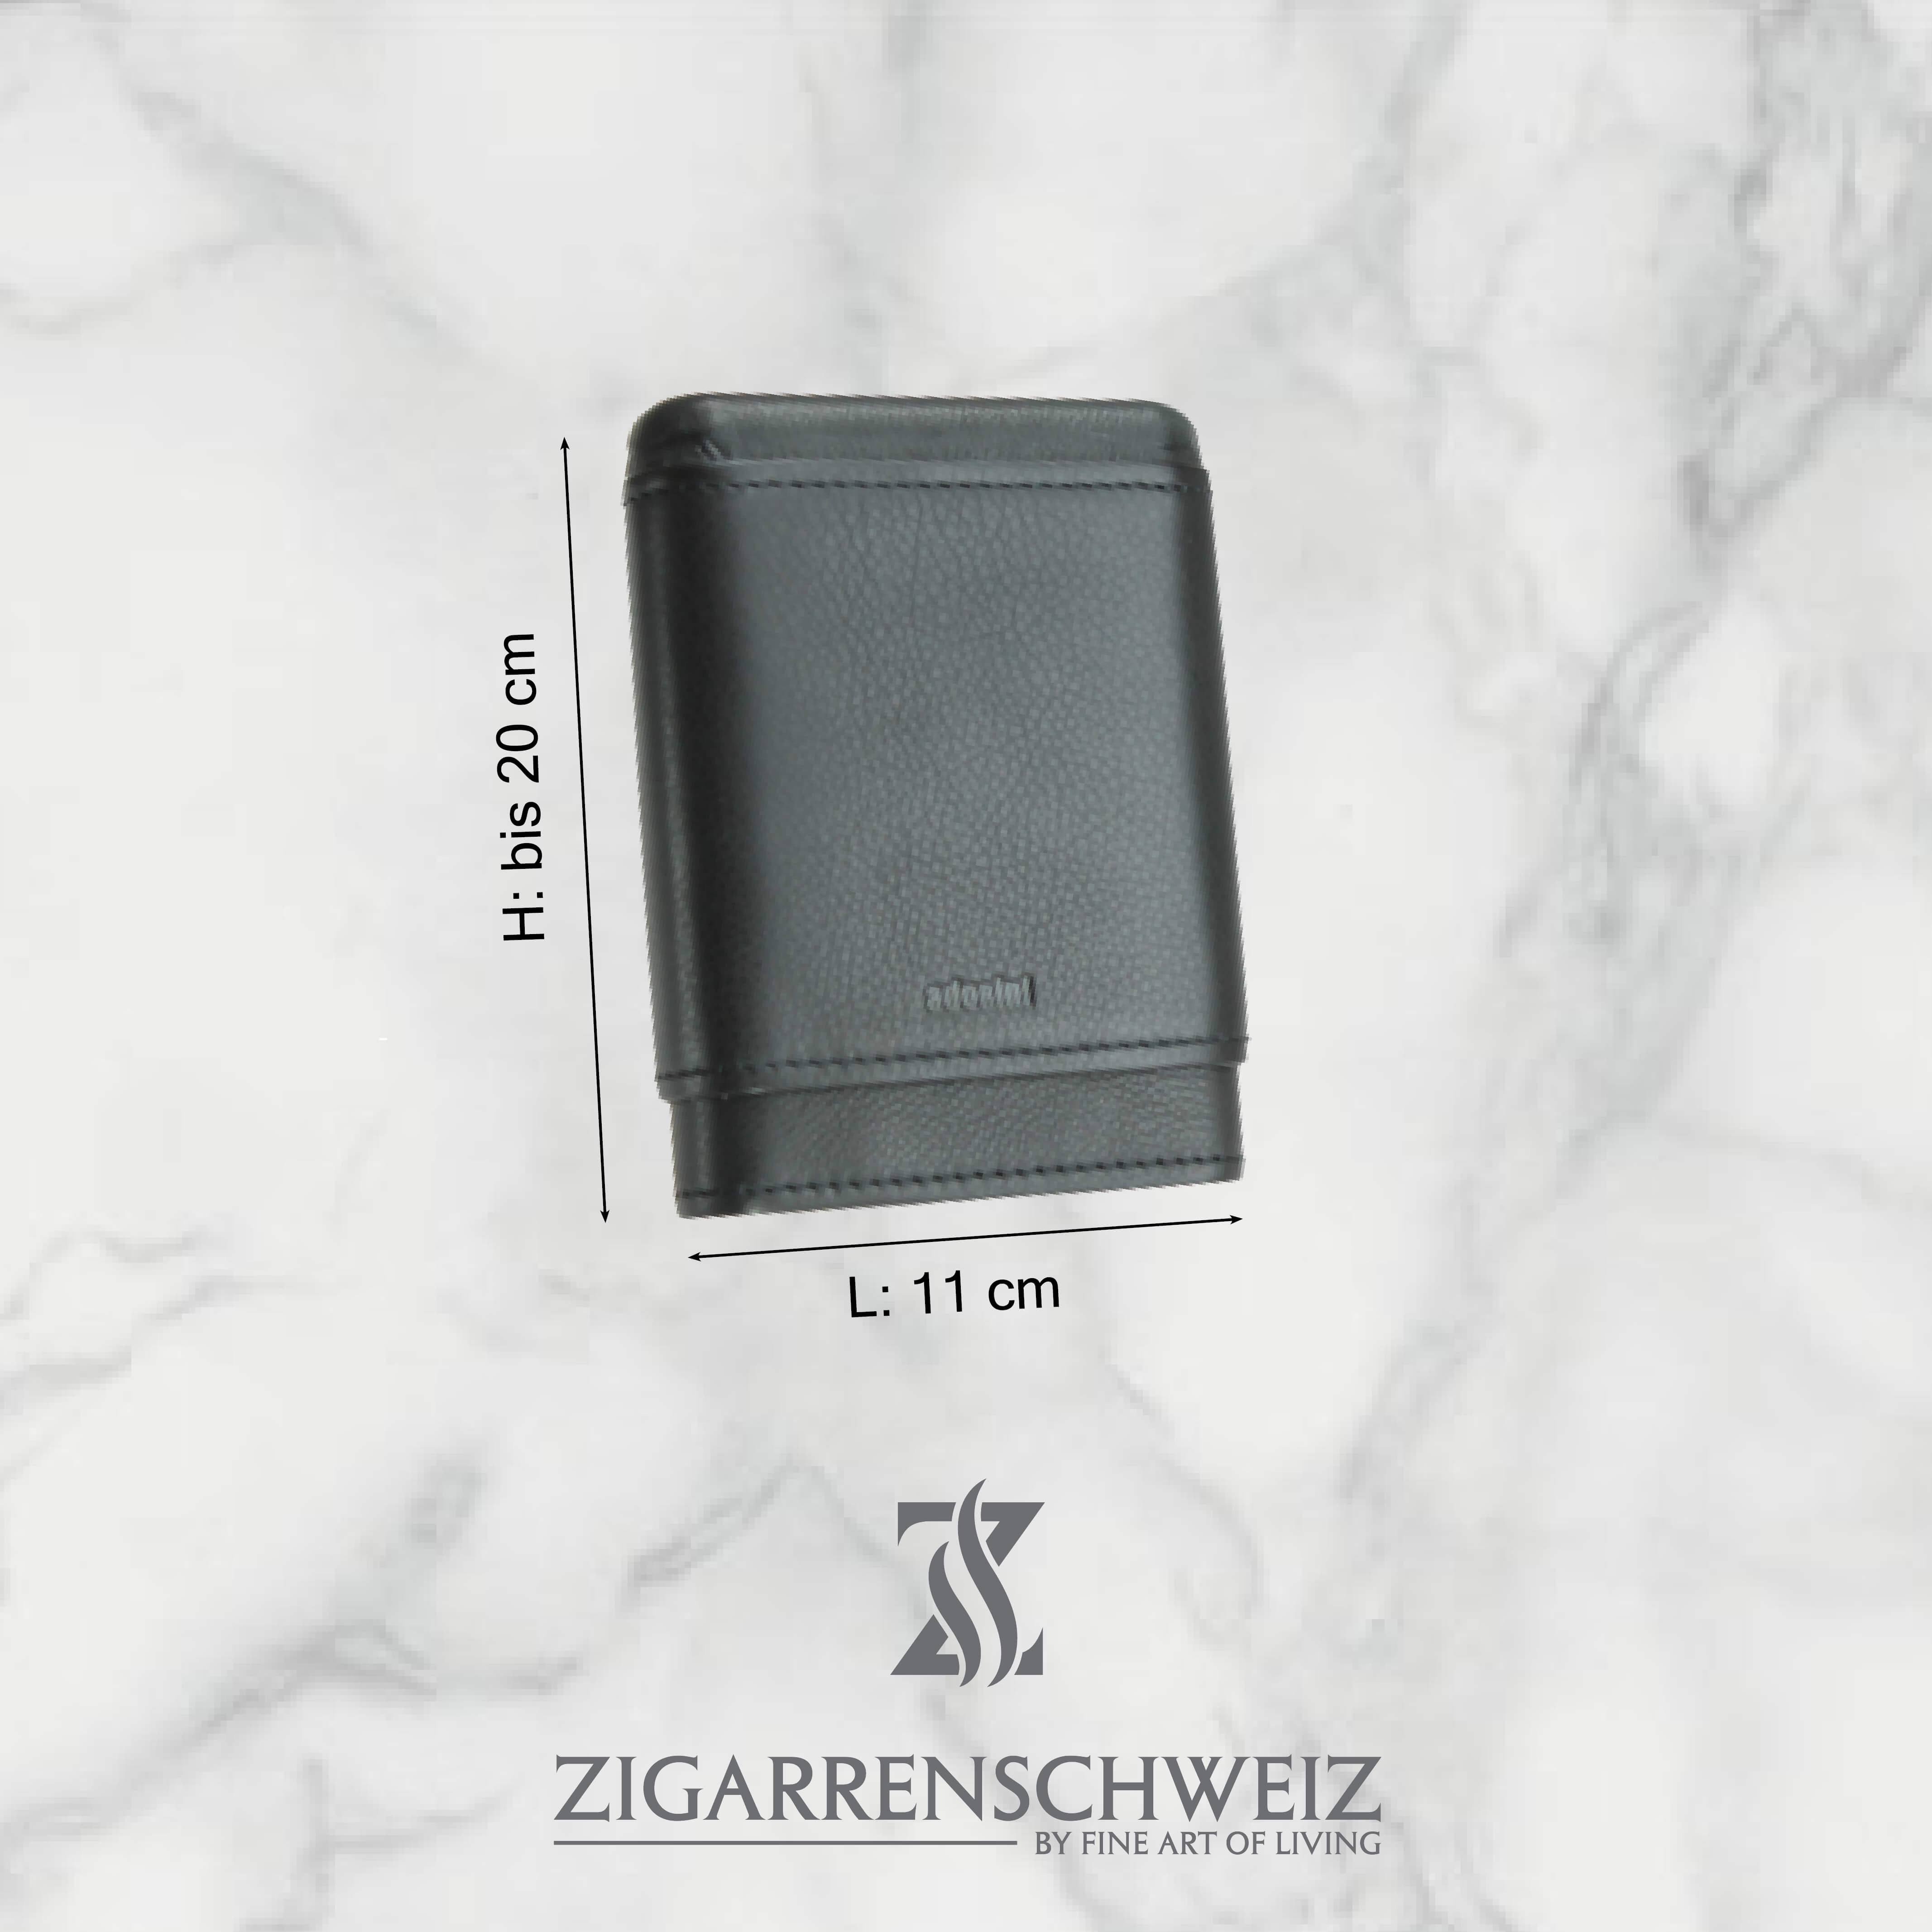 Adorini Zigarrenetui, Material: Echtleder, Kapazität: 3-5 Zigarren, Farbe: Schwarz mit Abmessungen